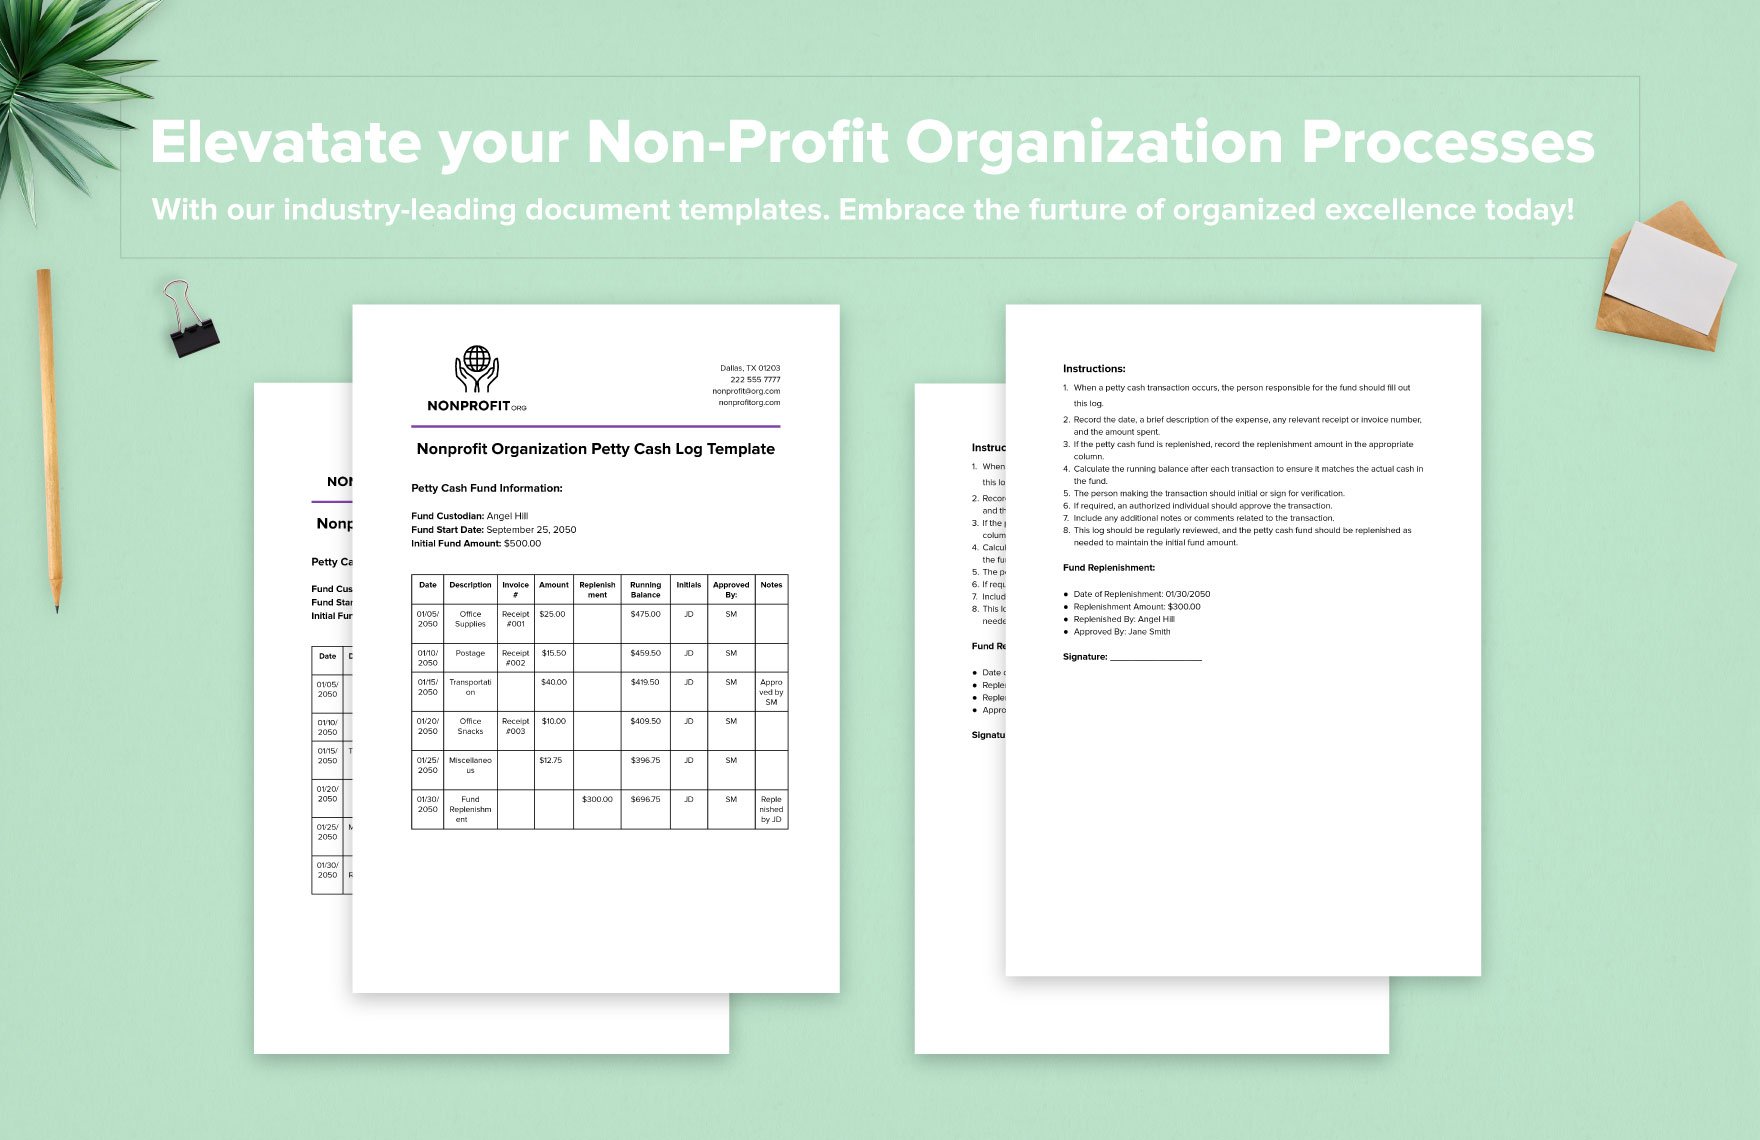 Nonprofit Organization Petty Cash Log Template